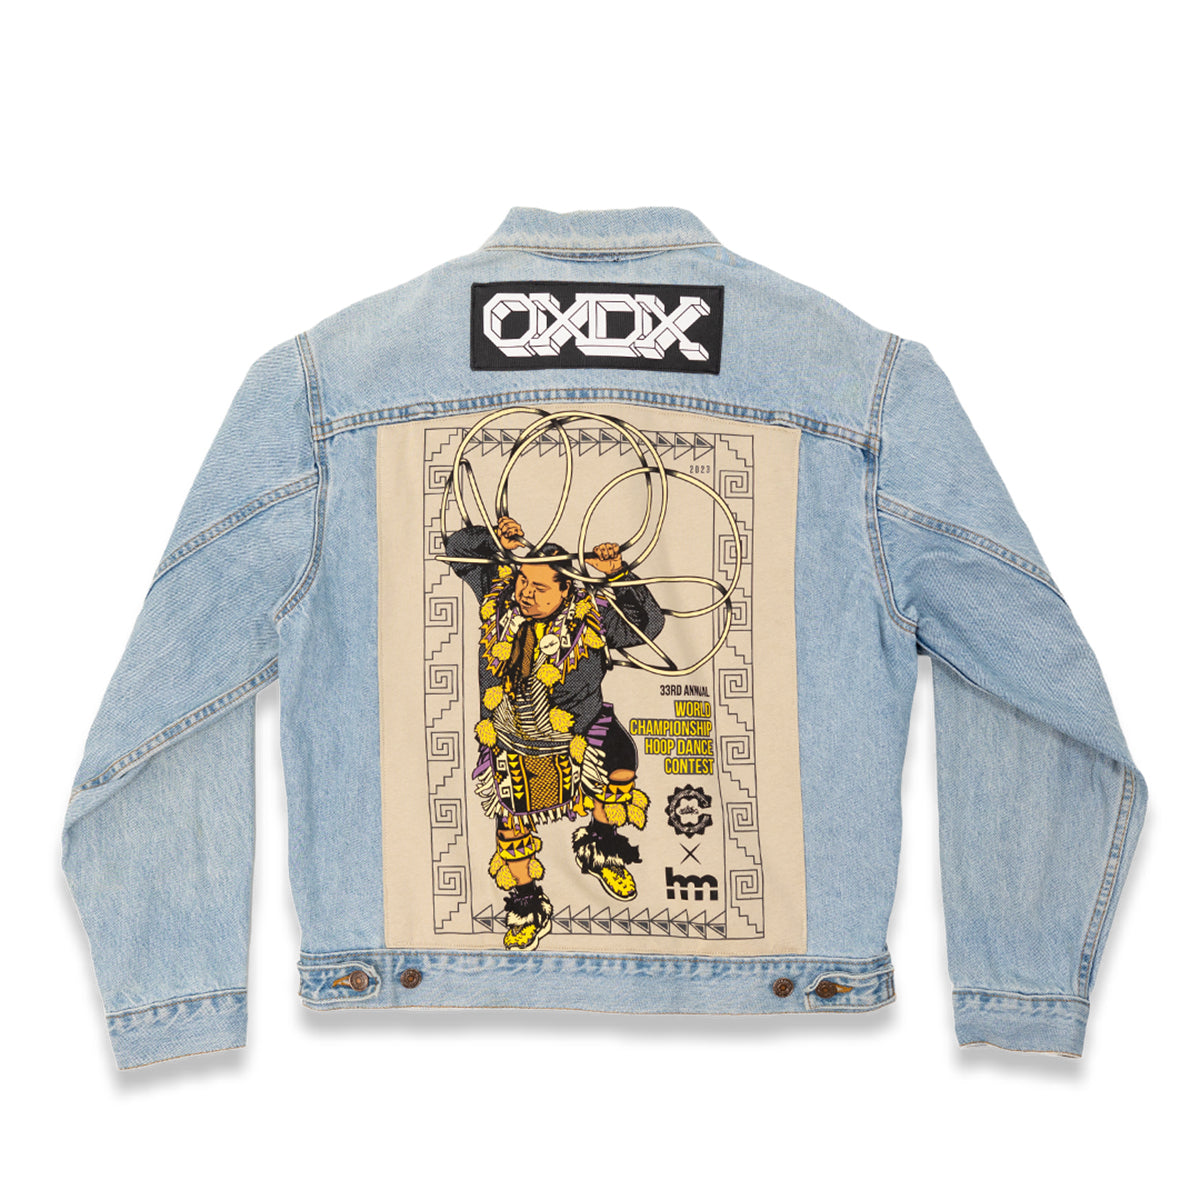 SSS Denim Jacket (Men's Small) – OXDX Clothing